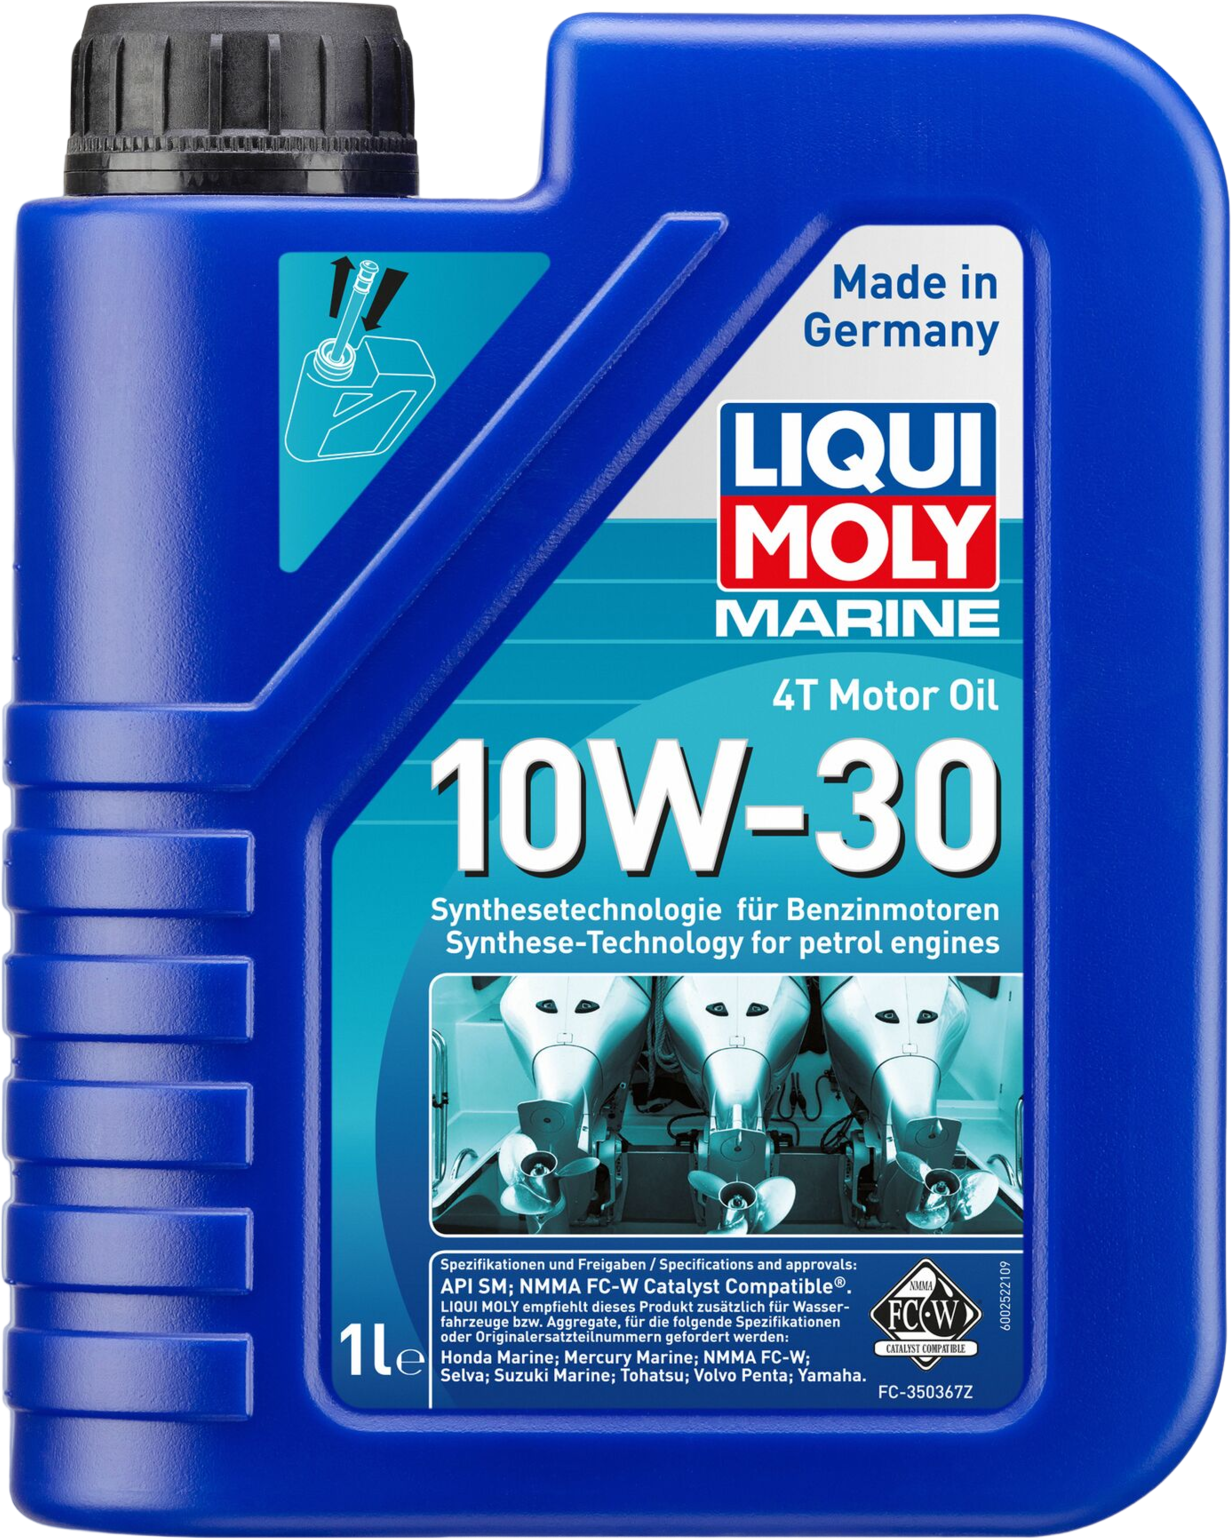 Liqui Moly Marine 4T Motor Oil 10W-30, 1 lt